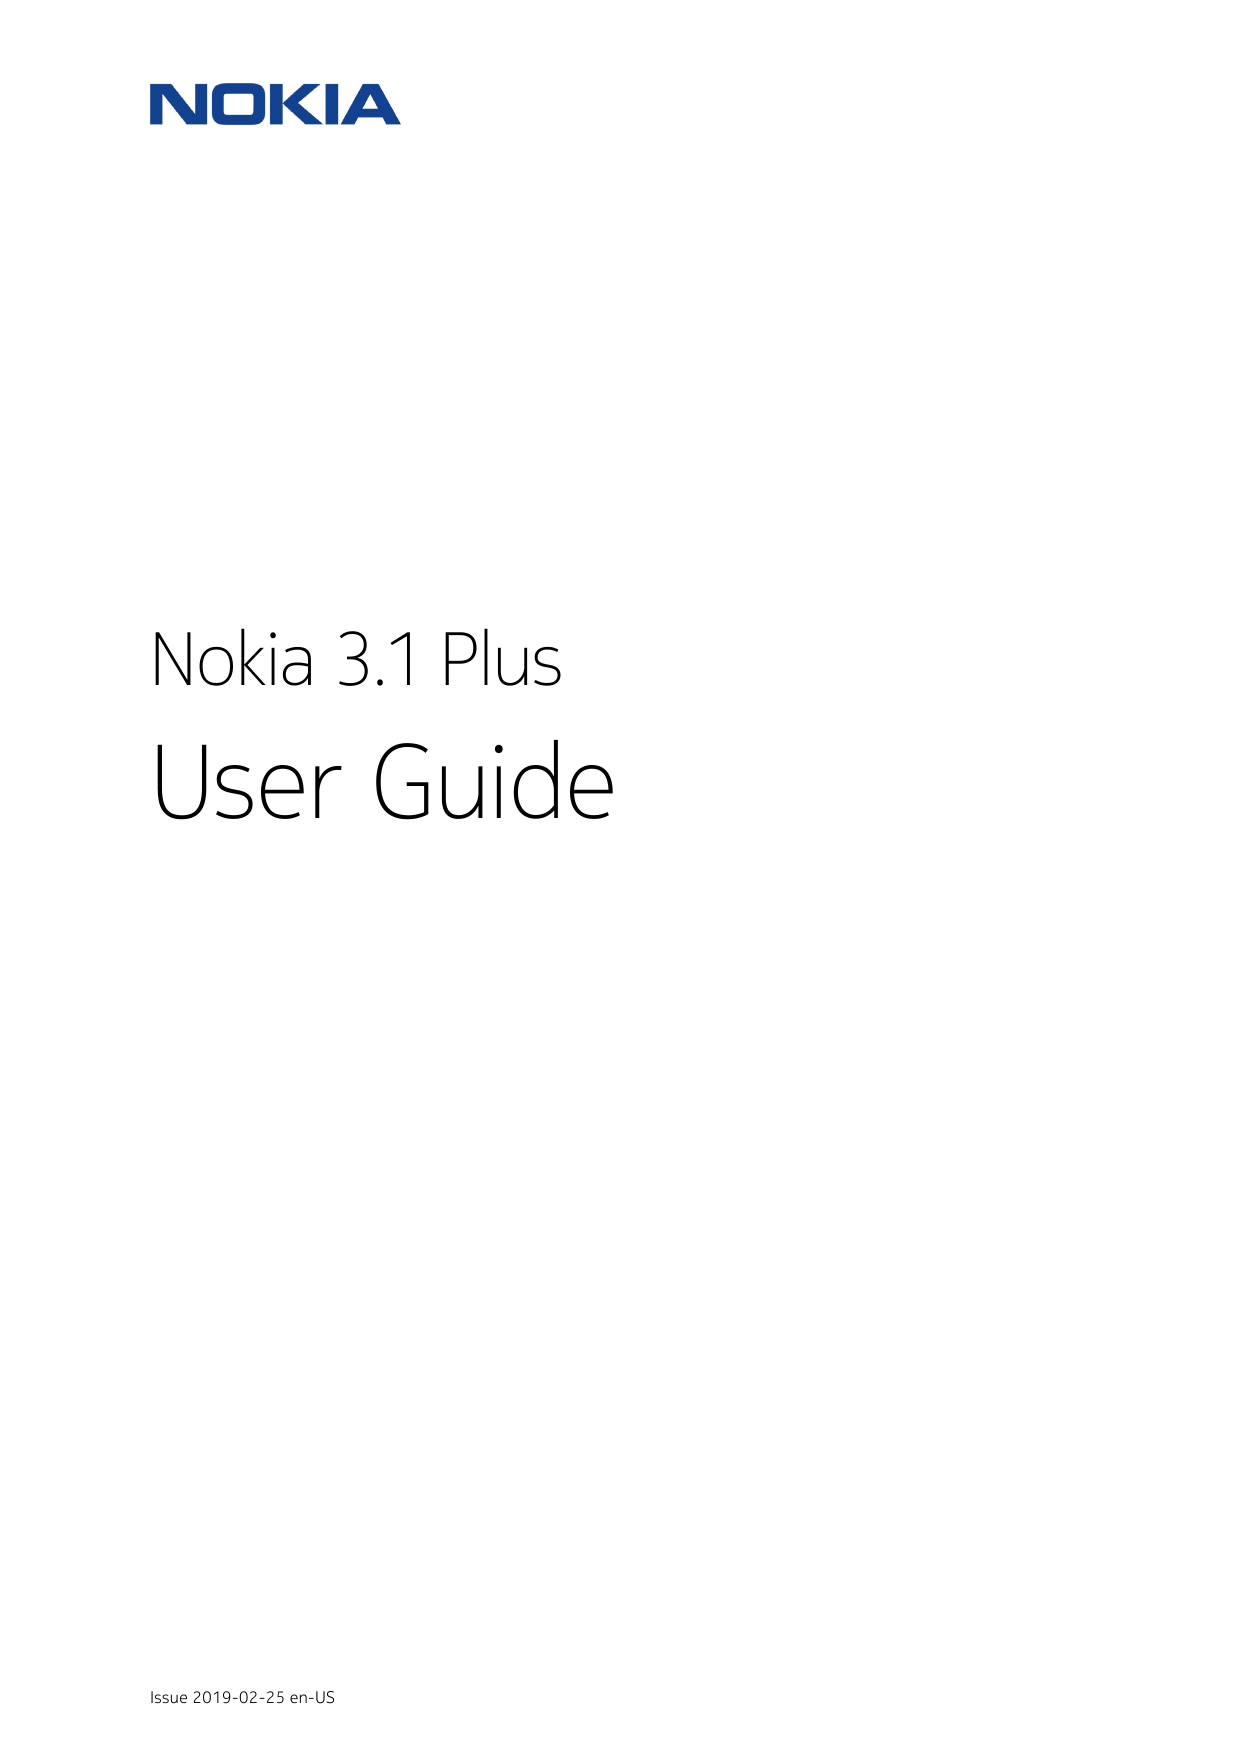 Nokia 3.1 PlusUser GuideIssue 2019-02-25 en-US